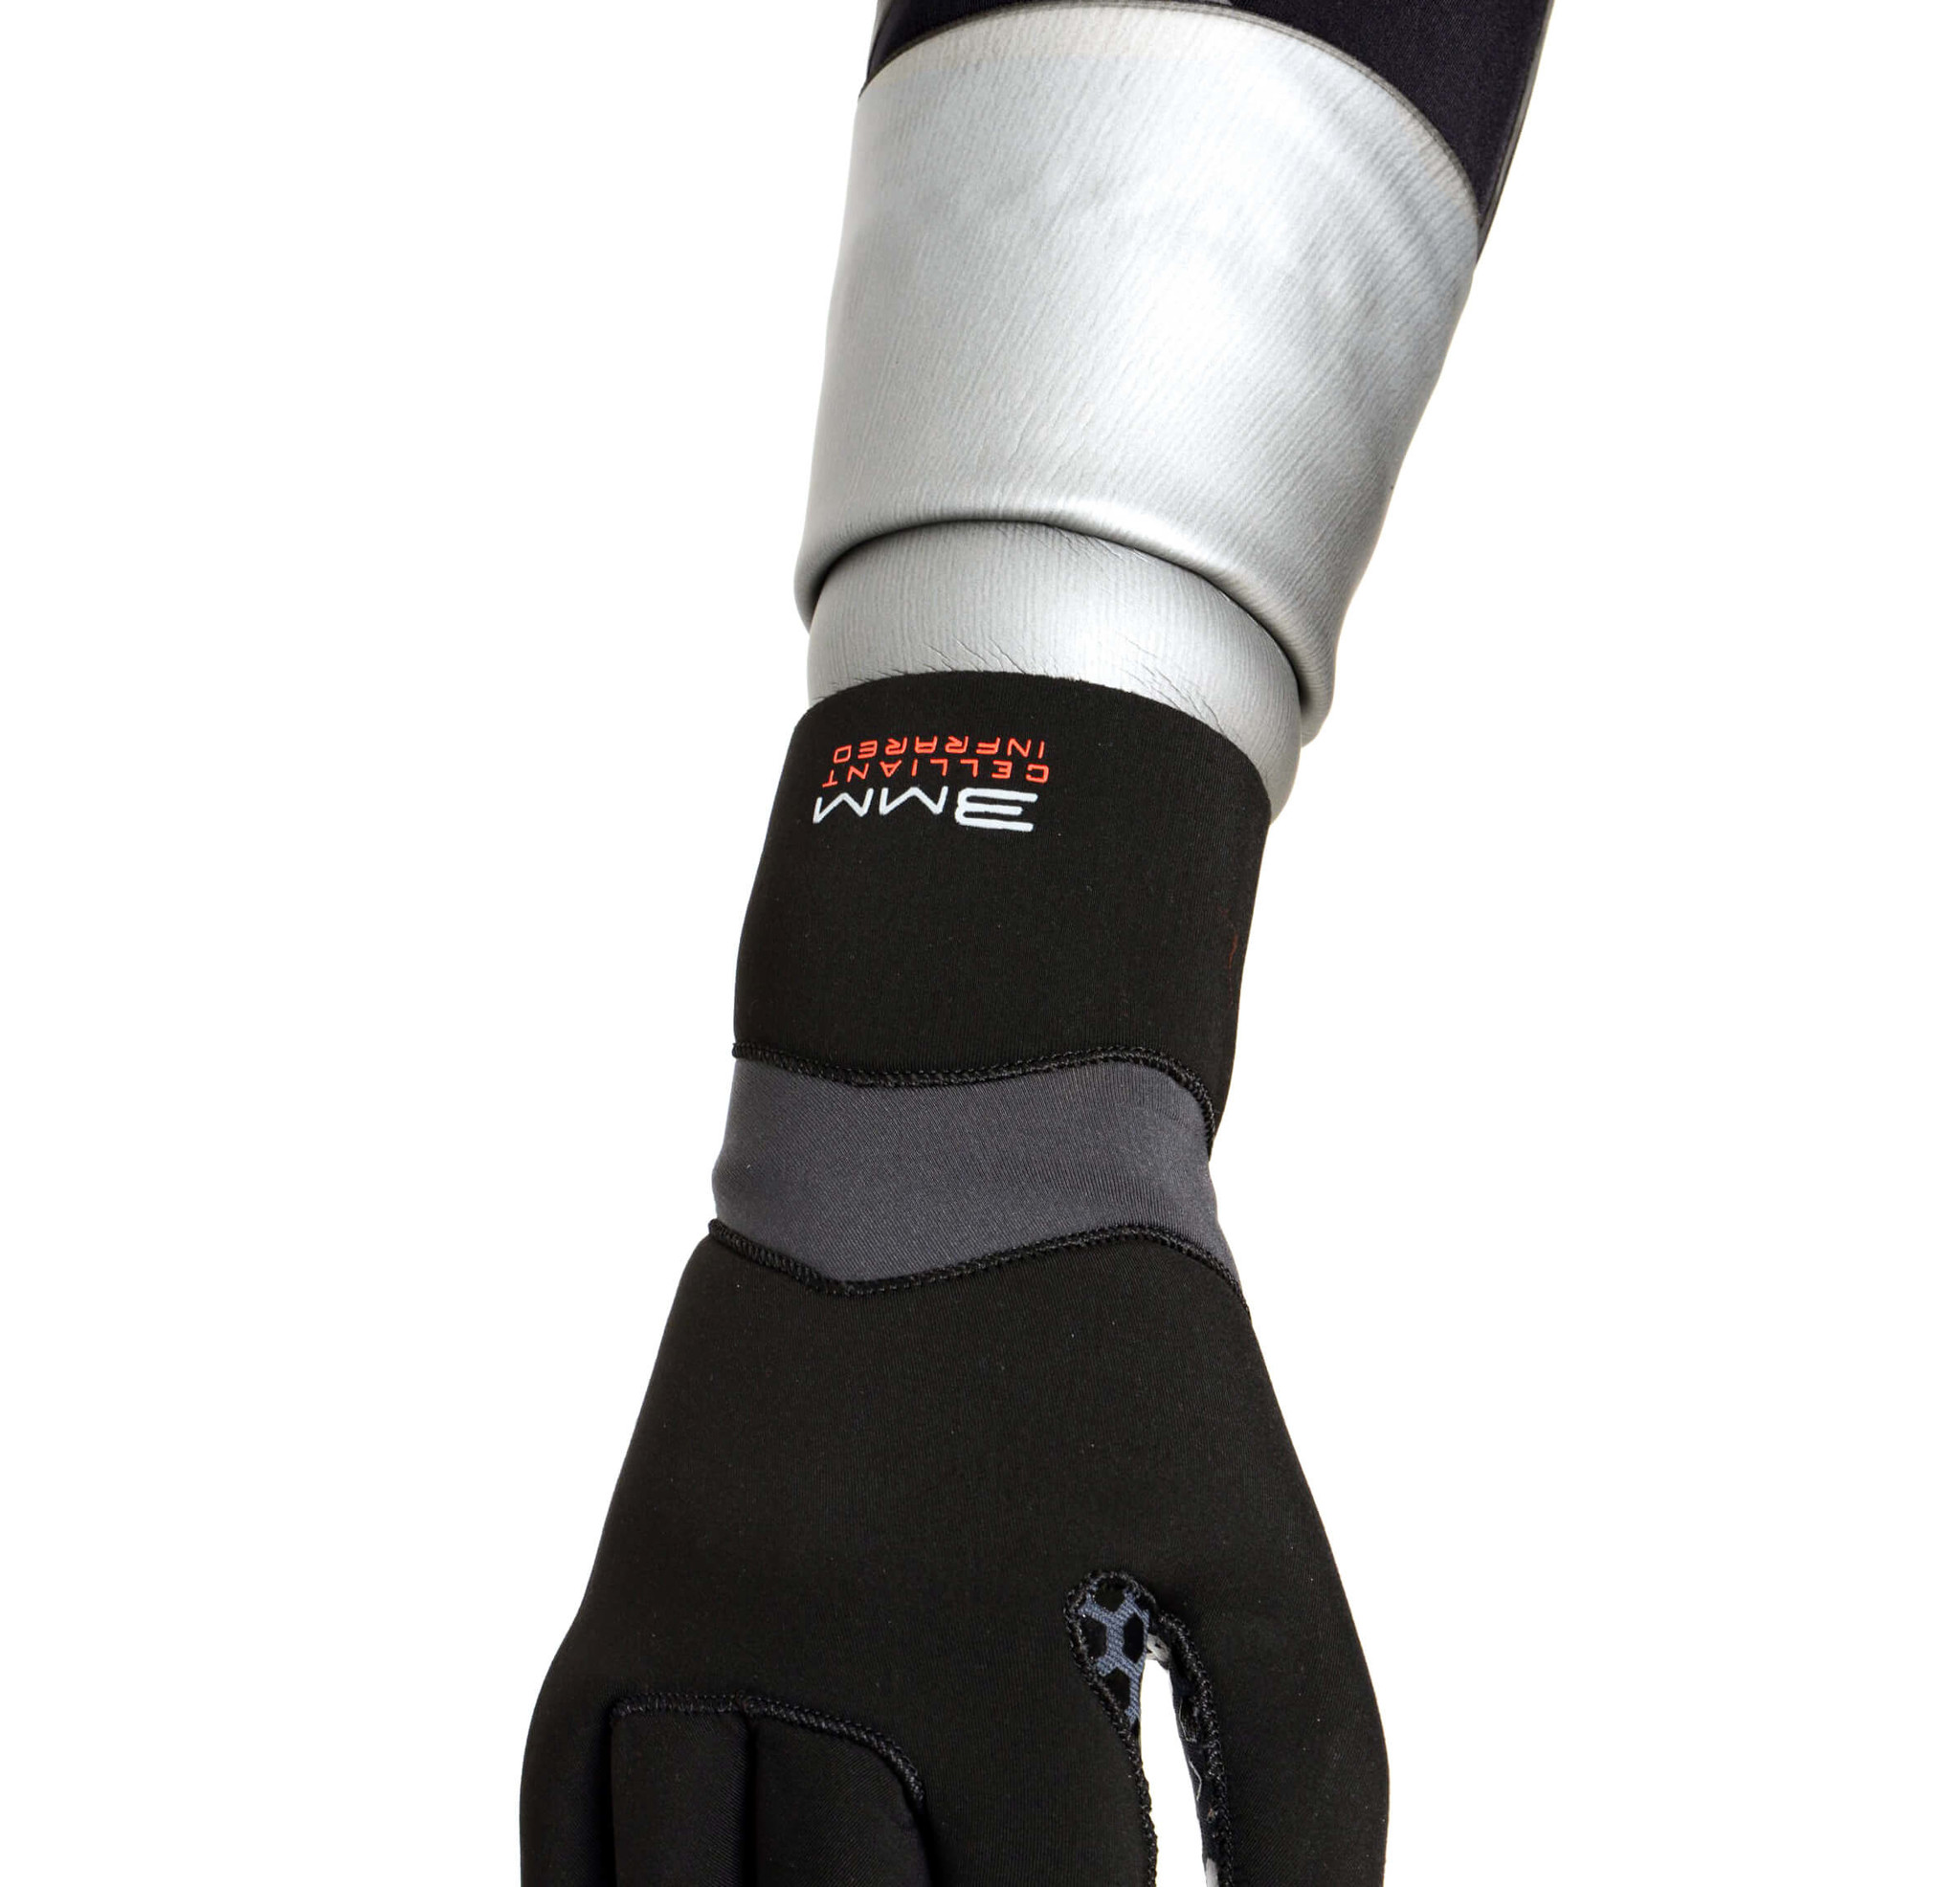 Bare 3mm Ultrawarmth Gloves Lucas Divestore 8587